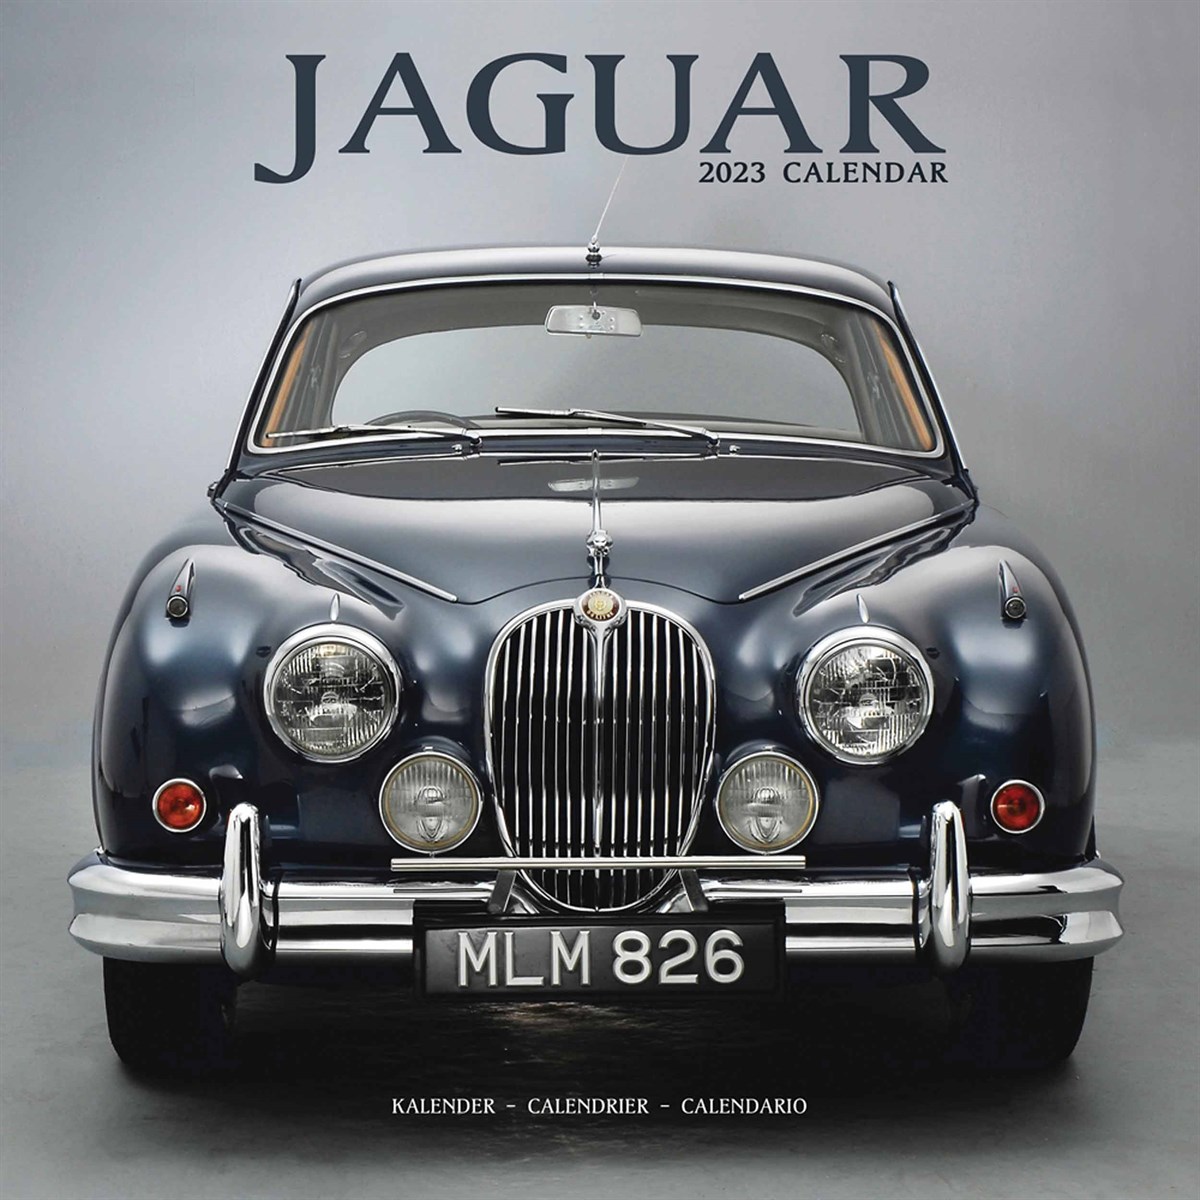 Jaguar 2023 Calendars